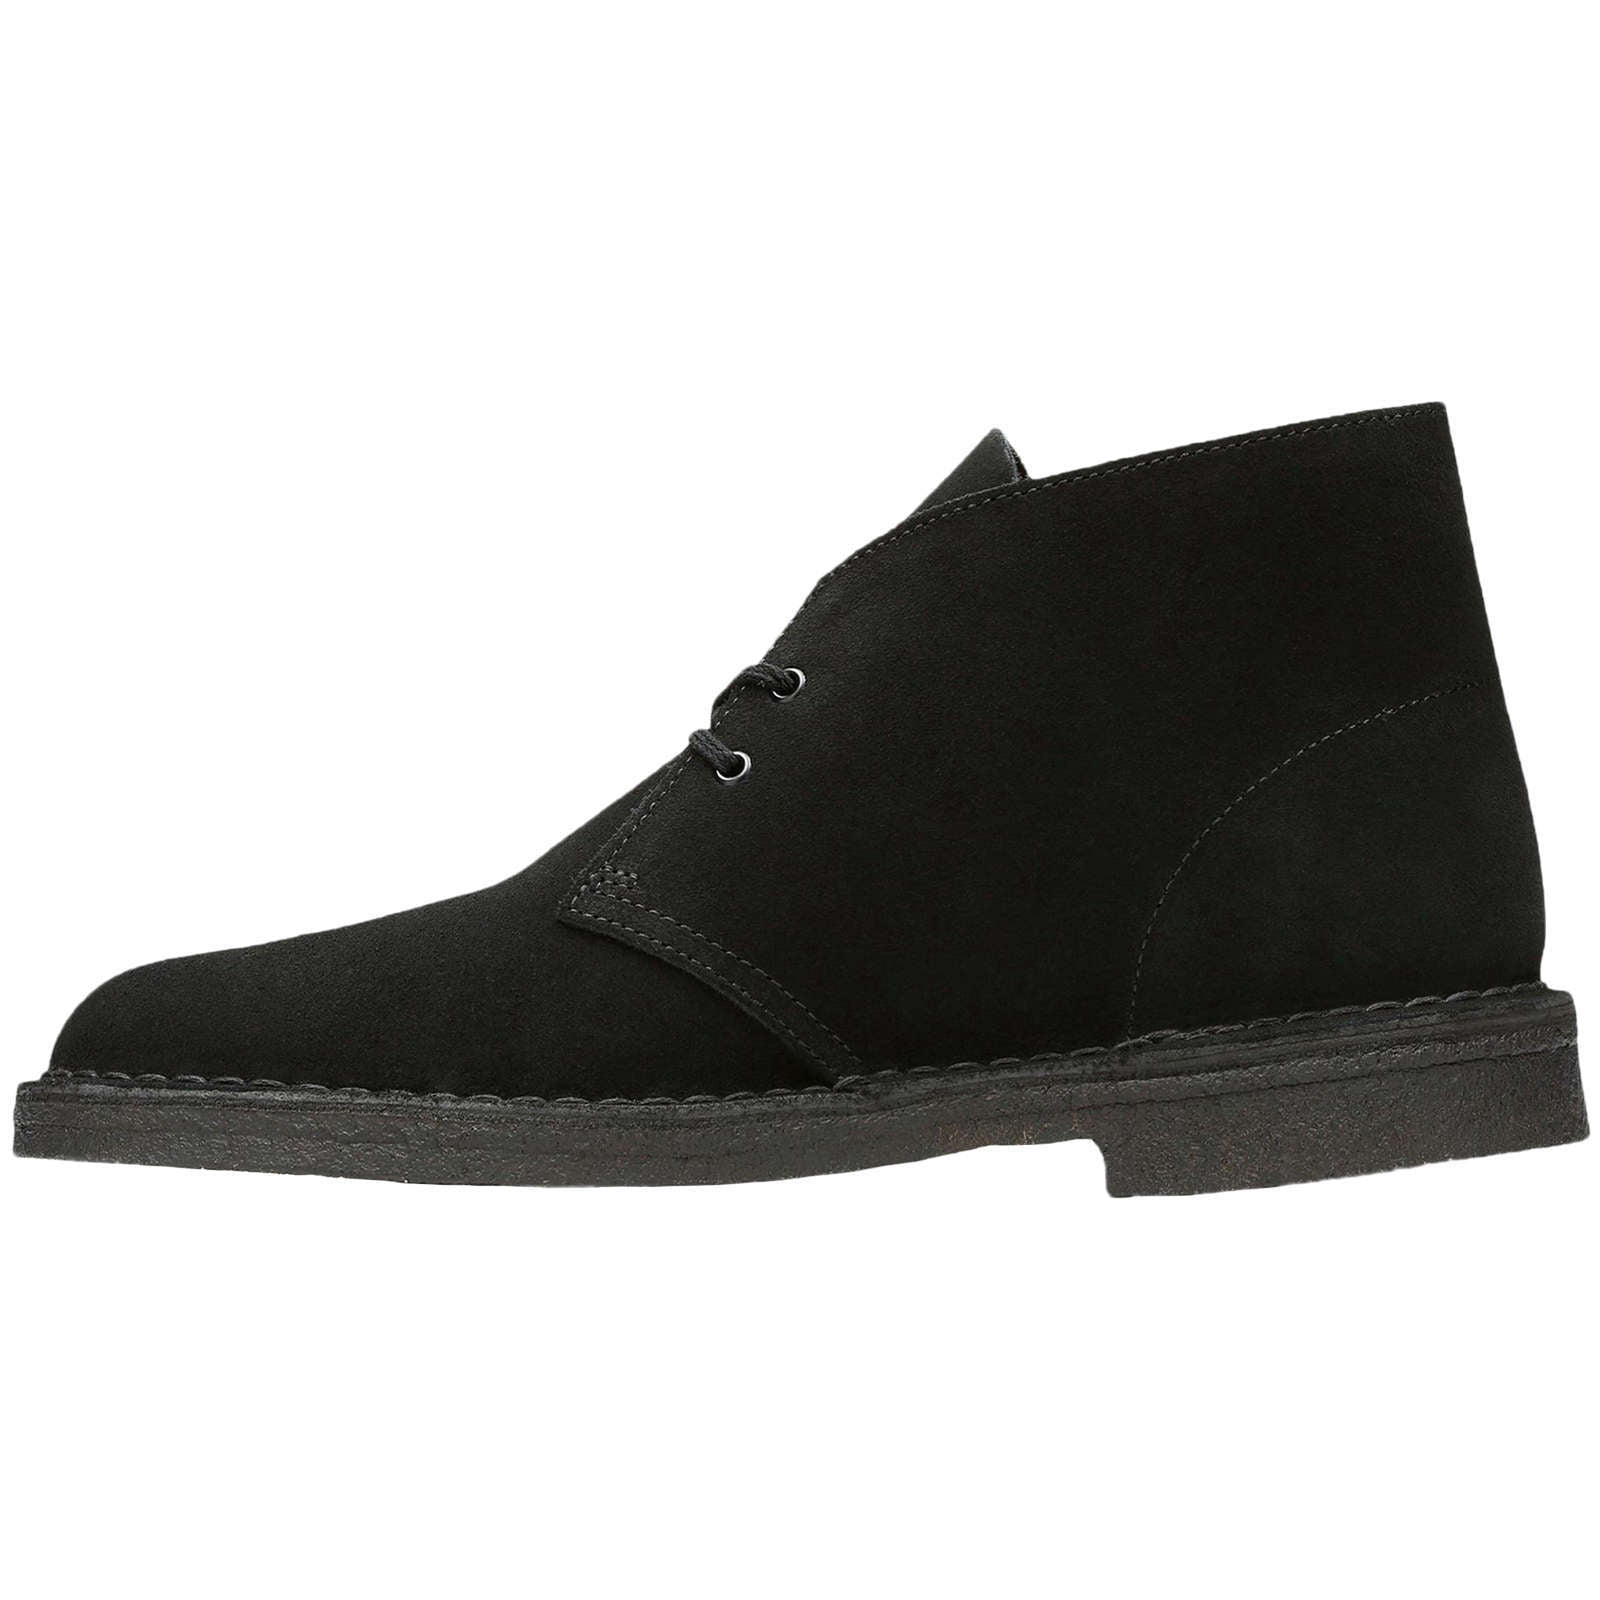 Clarks Originals Desert Boot Suede Leather Men's Boots#color_black